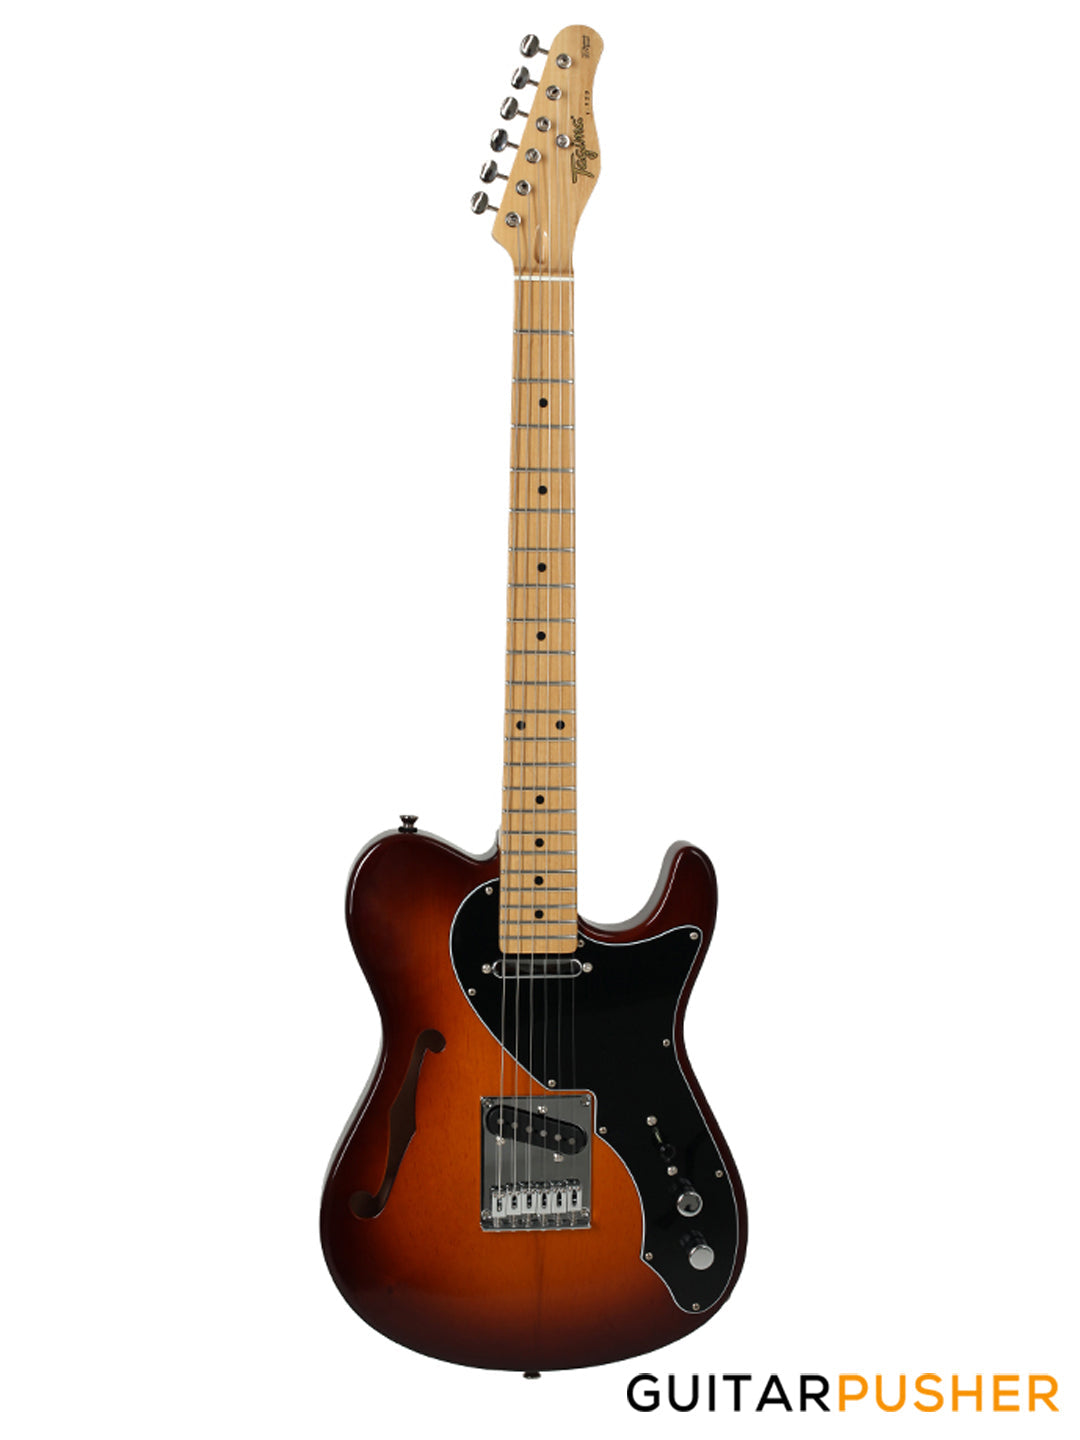 Tagima Brazil Series T-920 Semi-Hollow T-Style Electric Guitar (Honeyburst) Maple Fingerboard/Black Pickguard